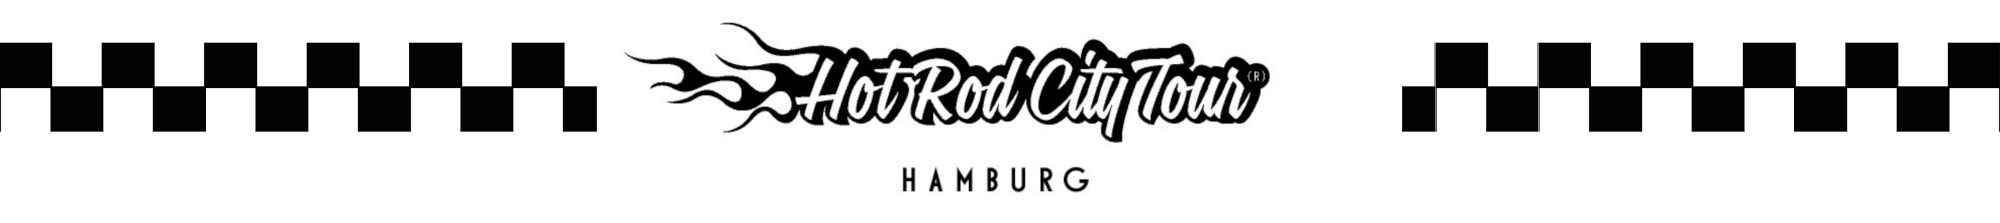 HOT ROD Citytour Hamburg